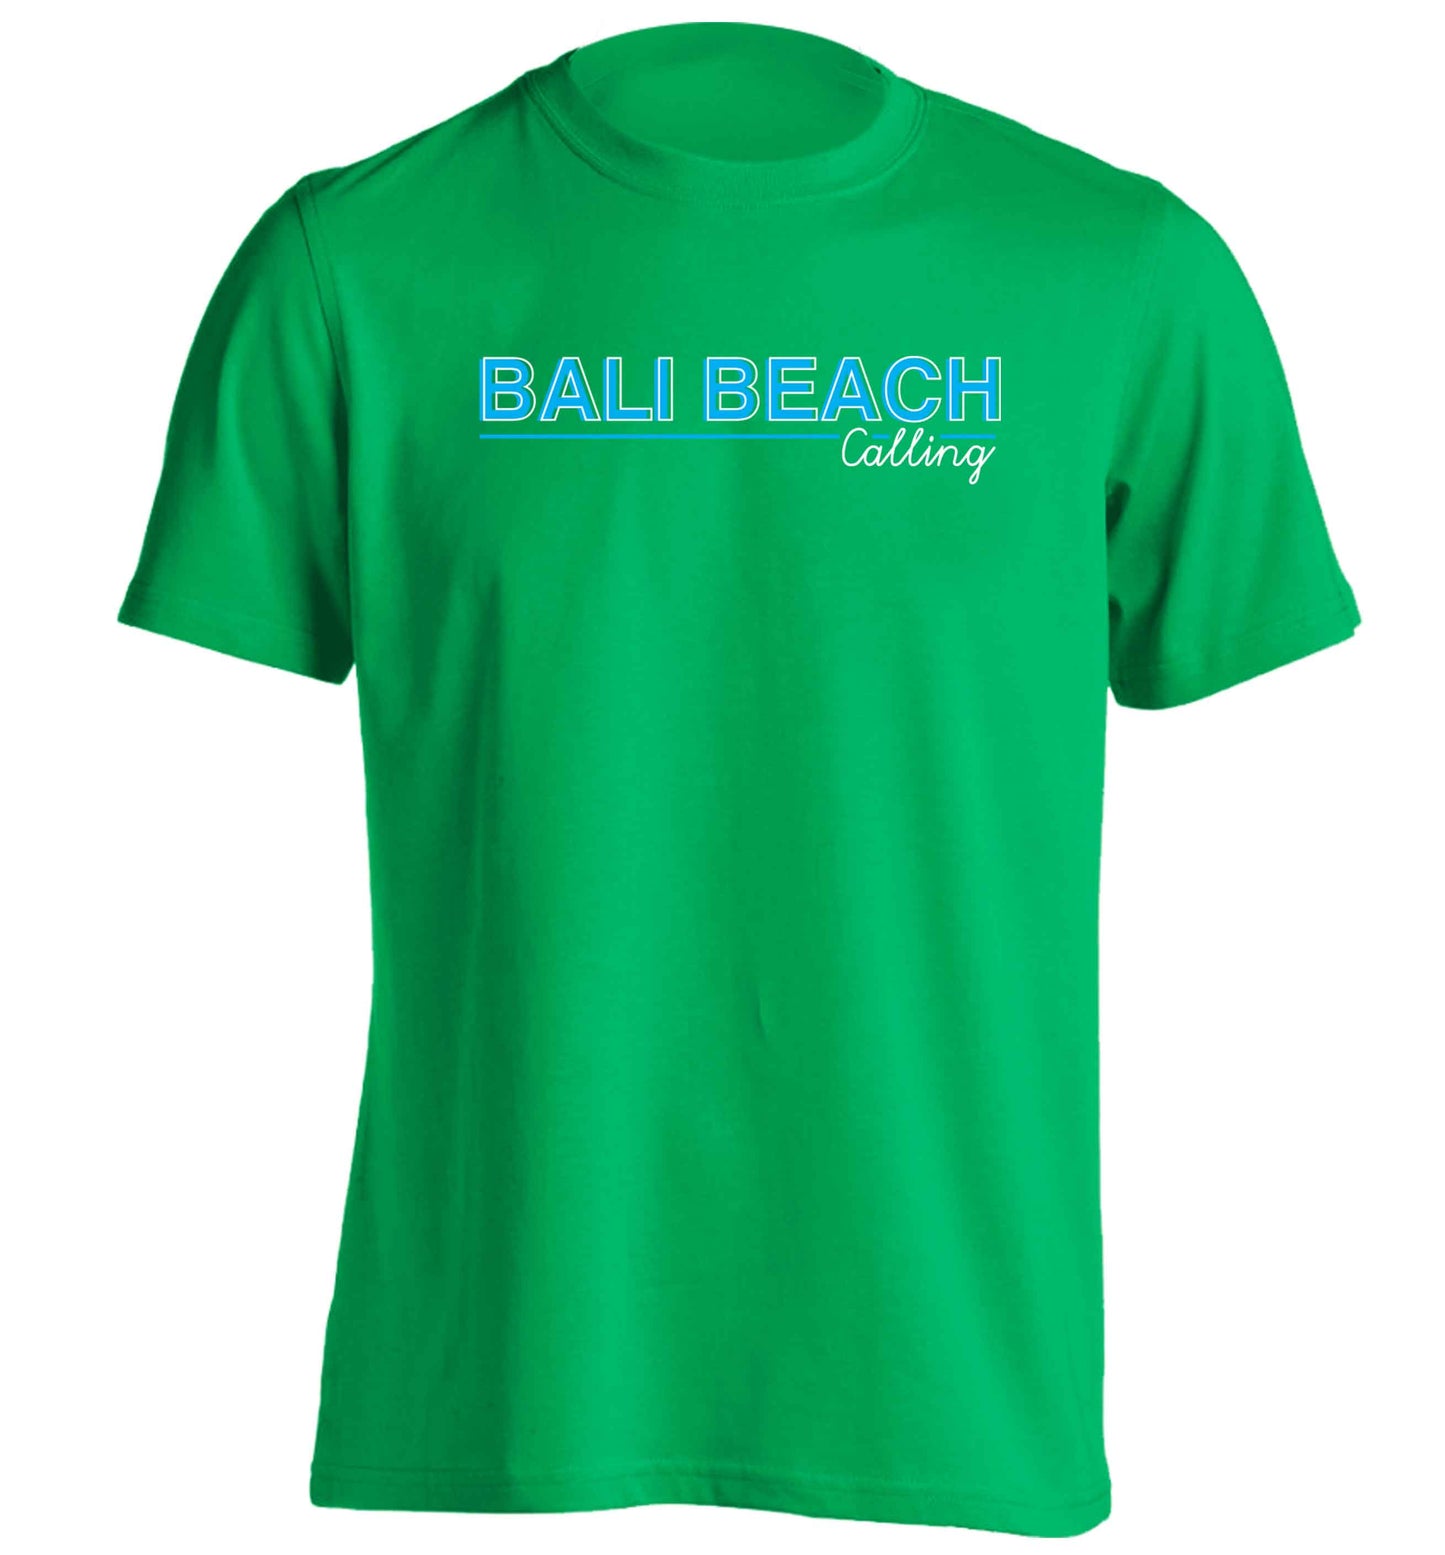 Bali beach calling adults unisex green Tshirt 2XL